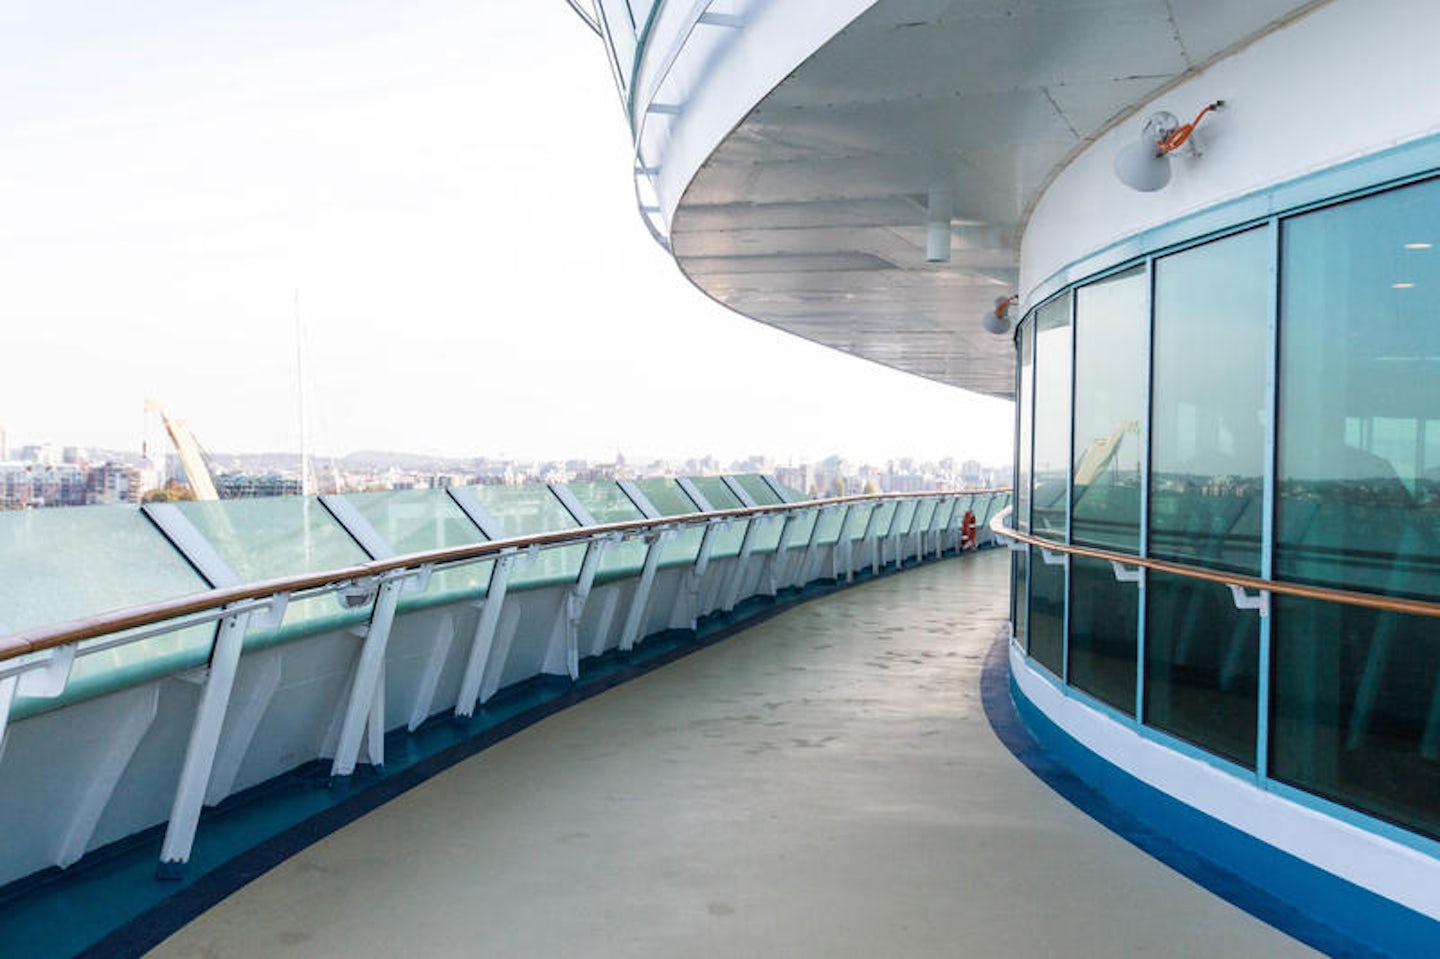 Peek-a-Boo Bridge Overlook on Explorer of the Seas